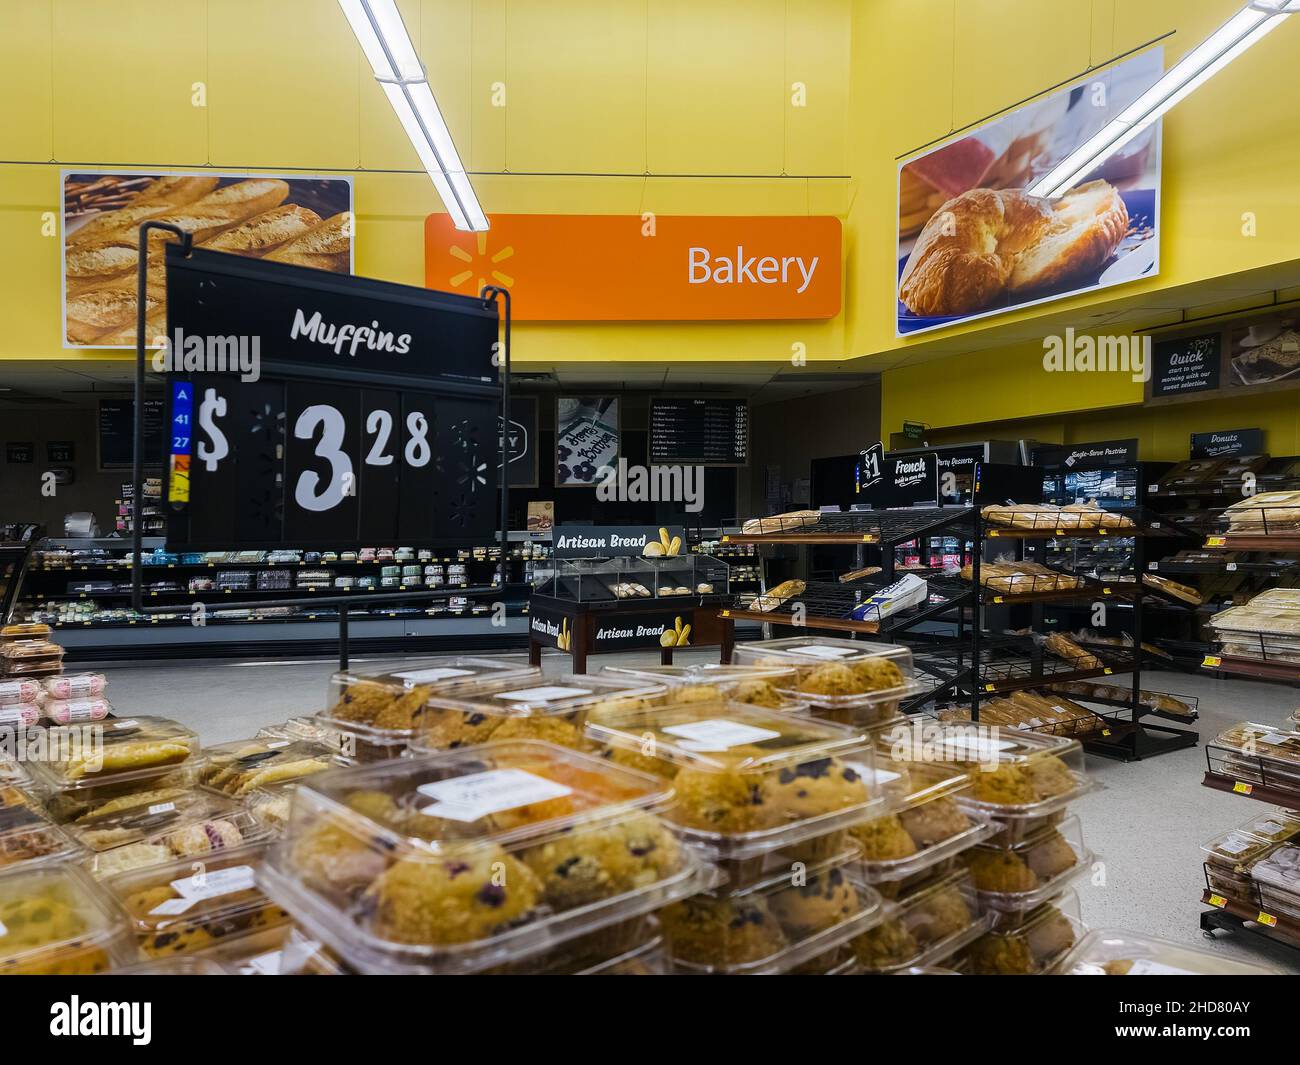 walmart supercenter in orlando hypermarket florida usa Stock Photo - Alamy